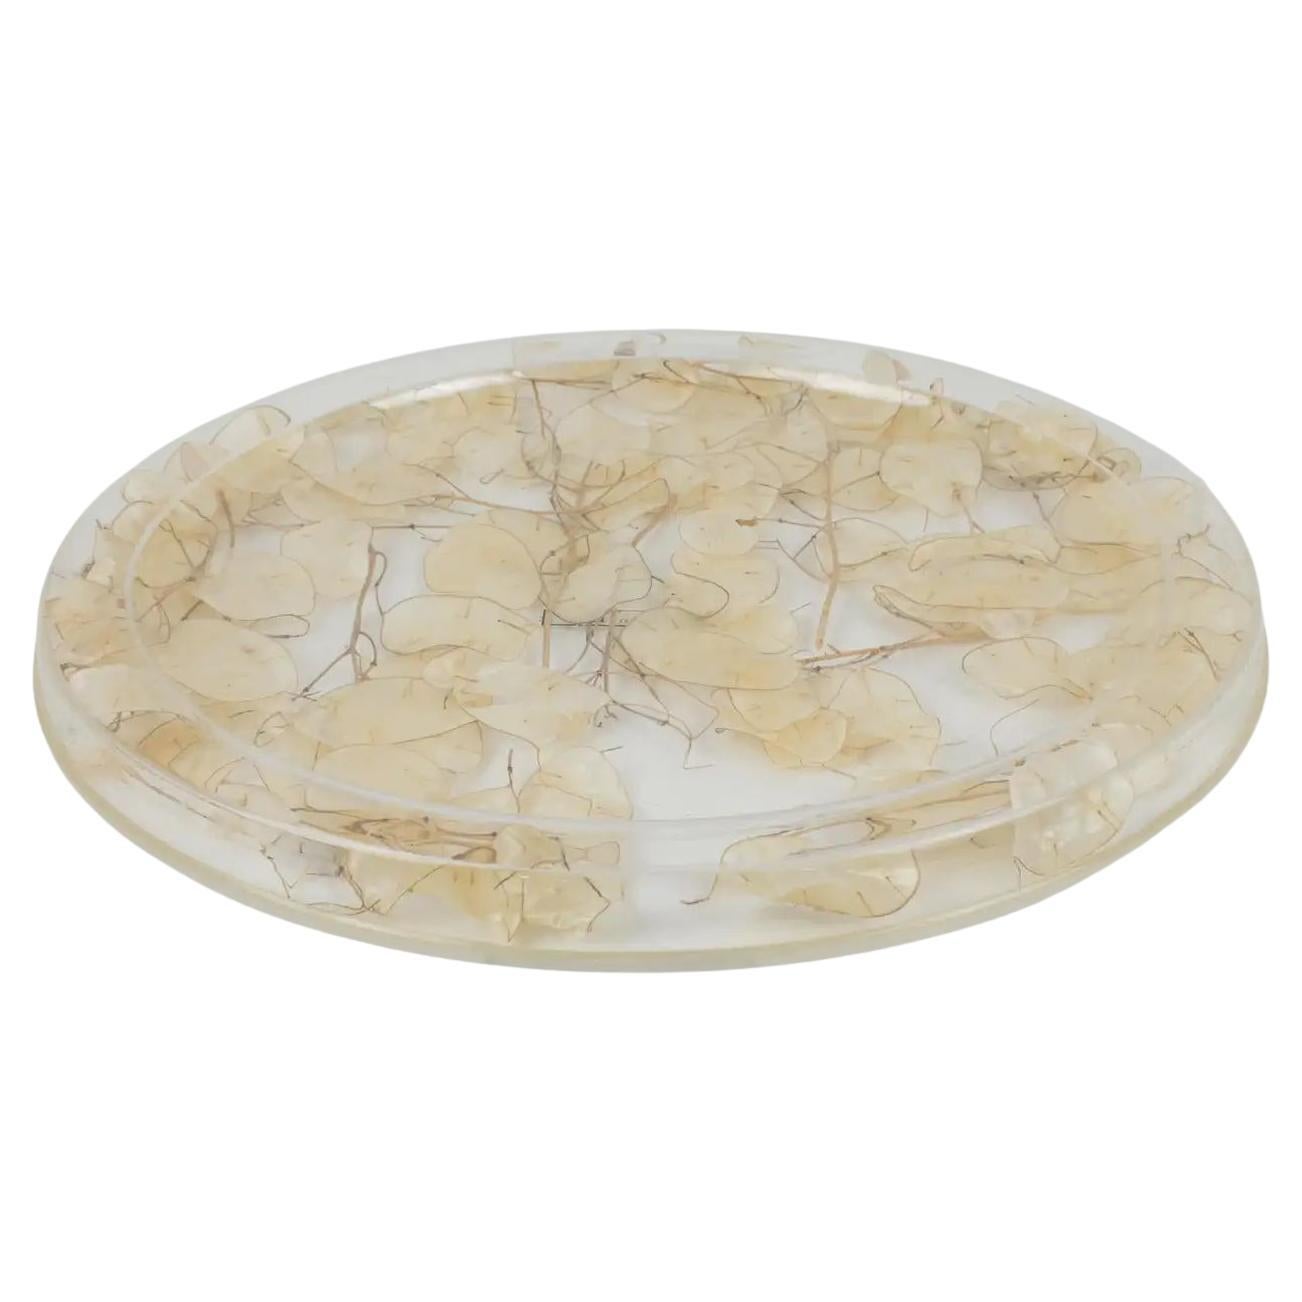 Christian Dior Home Collection Lucite-Tablettplatte mit Dried Lunaria im Angebot